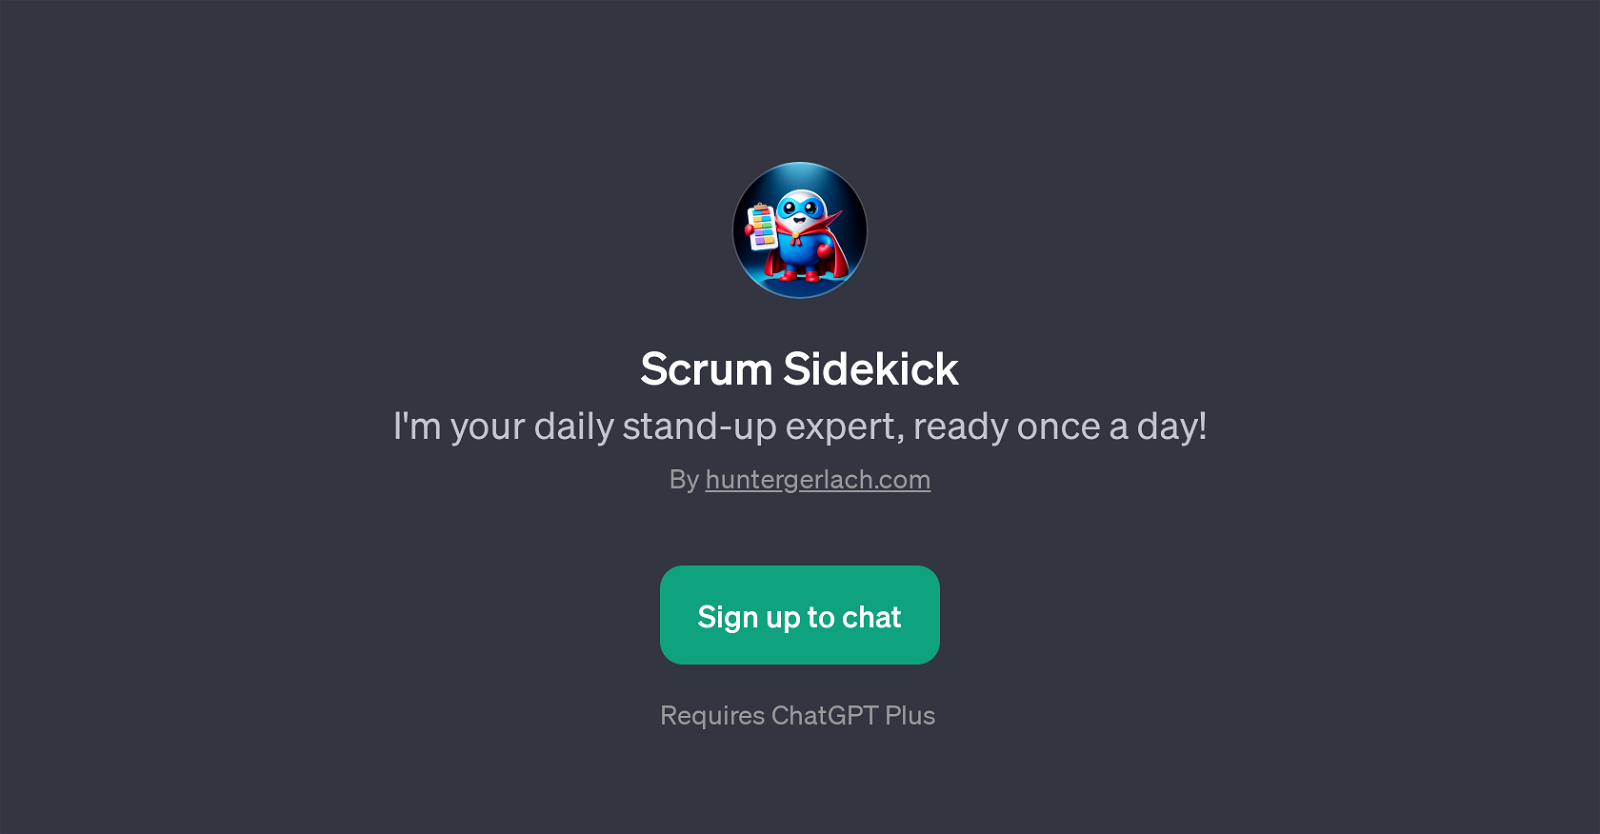 Scrum Sidekick website